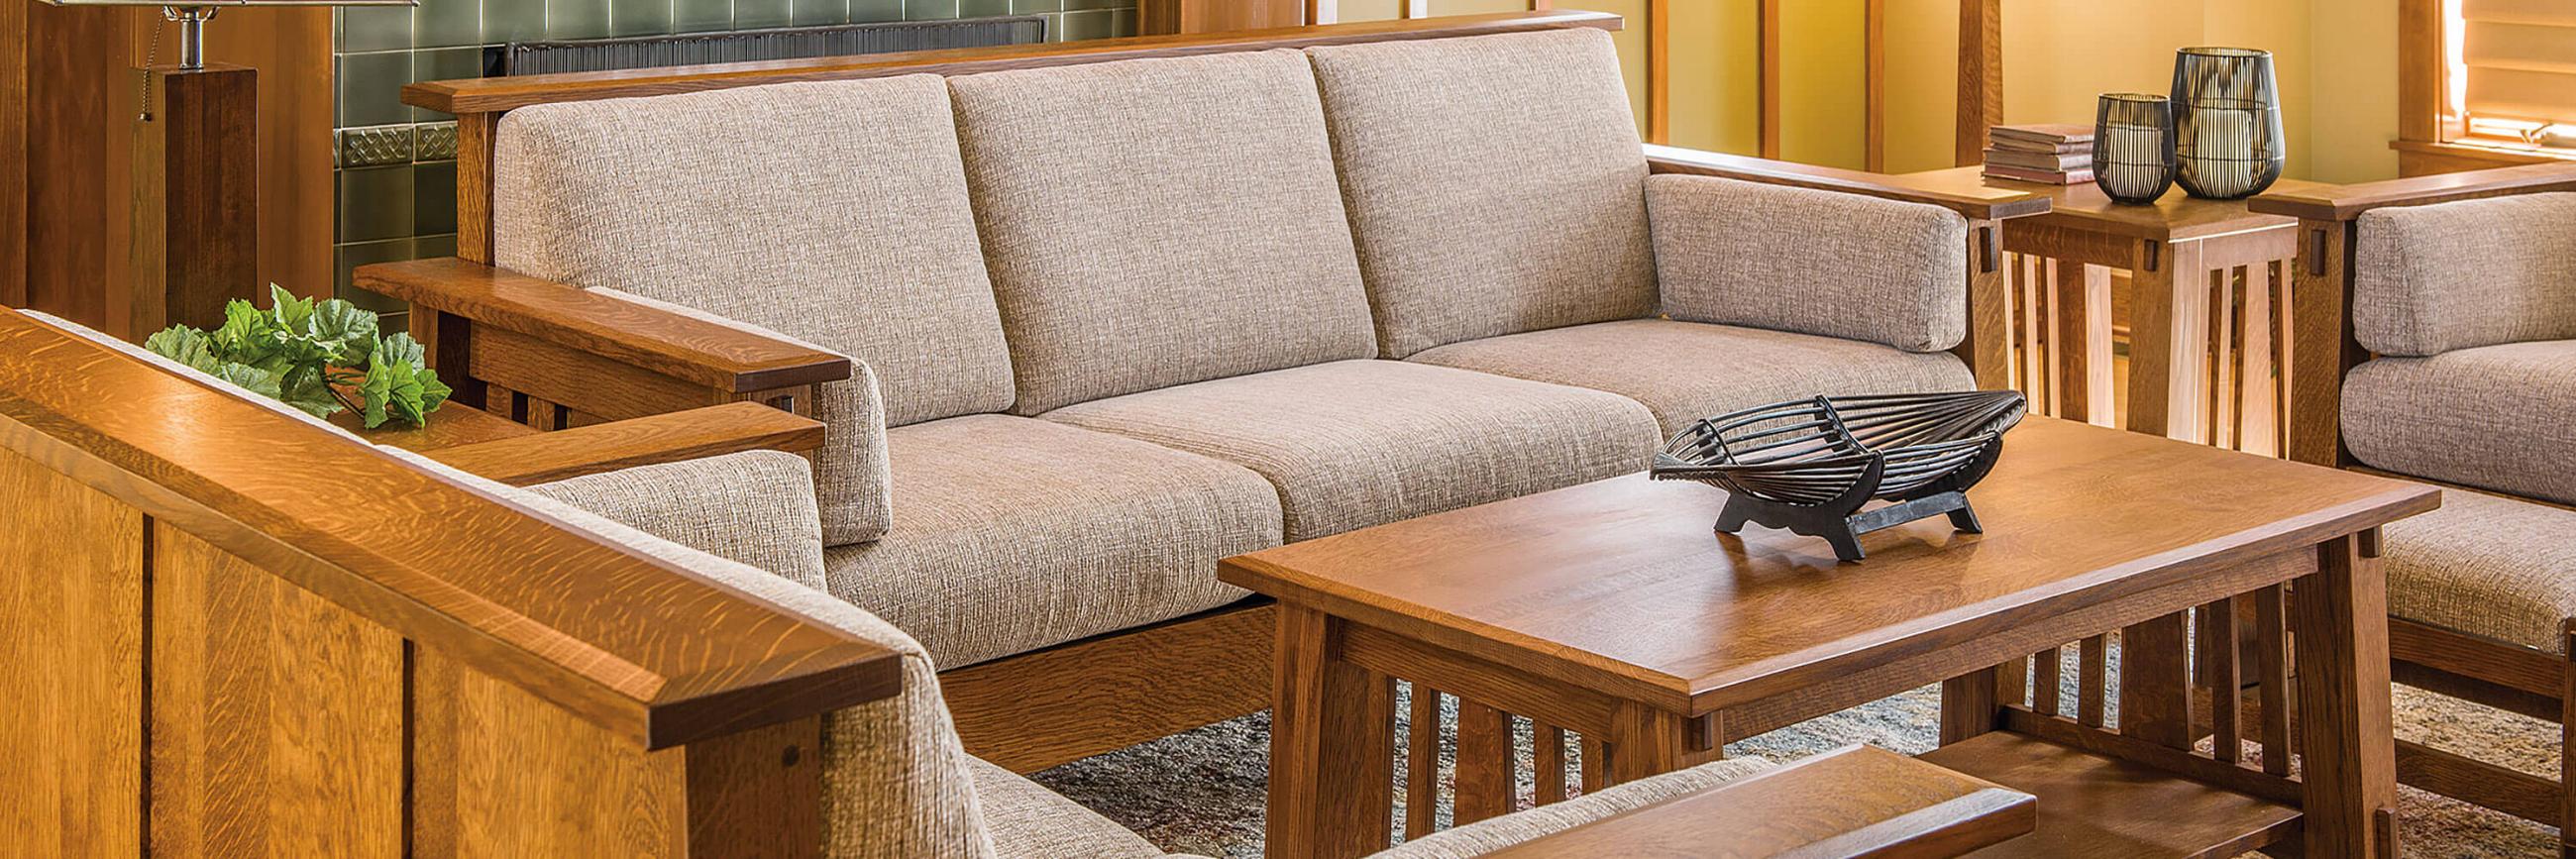 NIWA Living Room Furniture Set